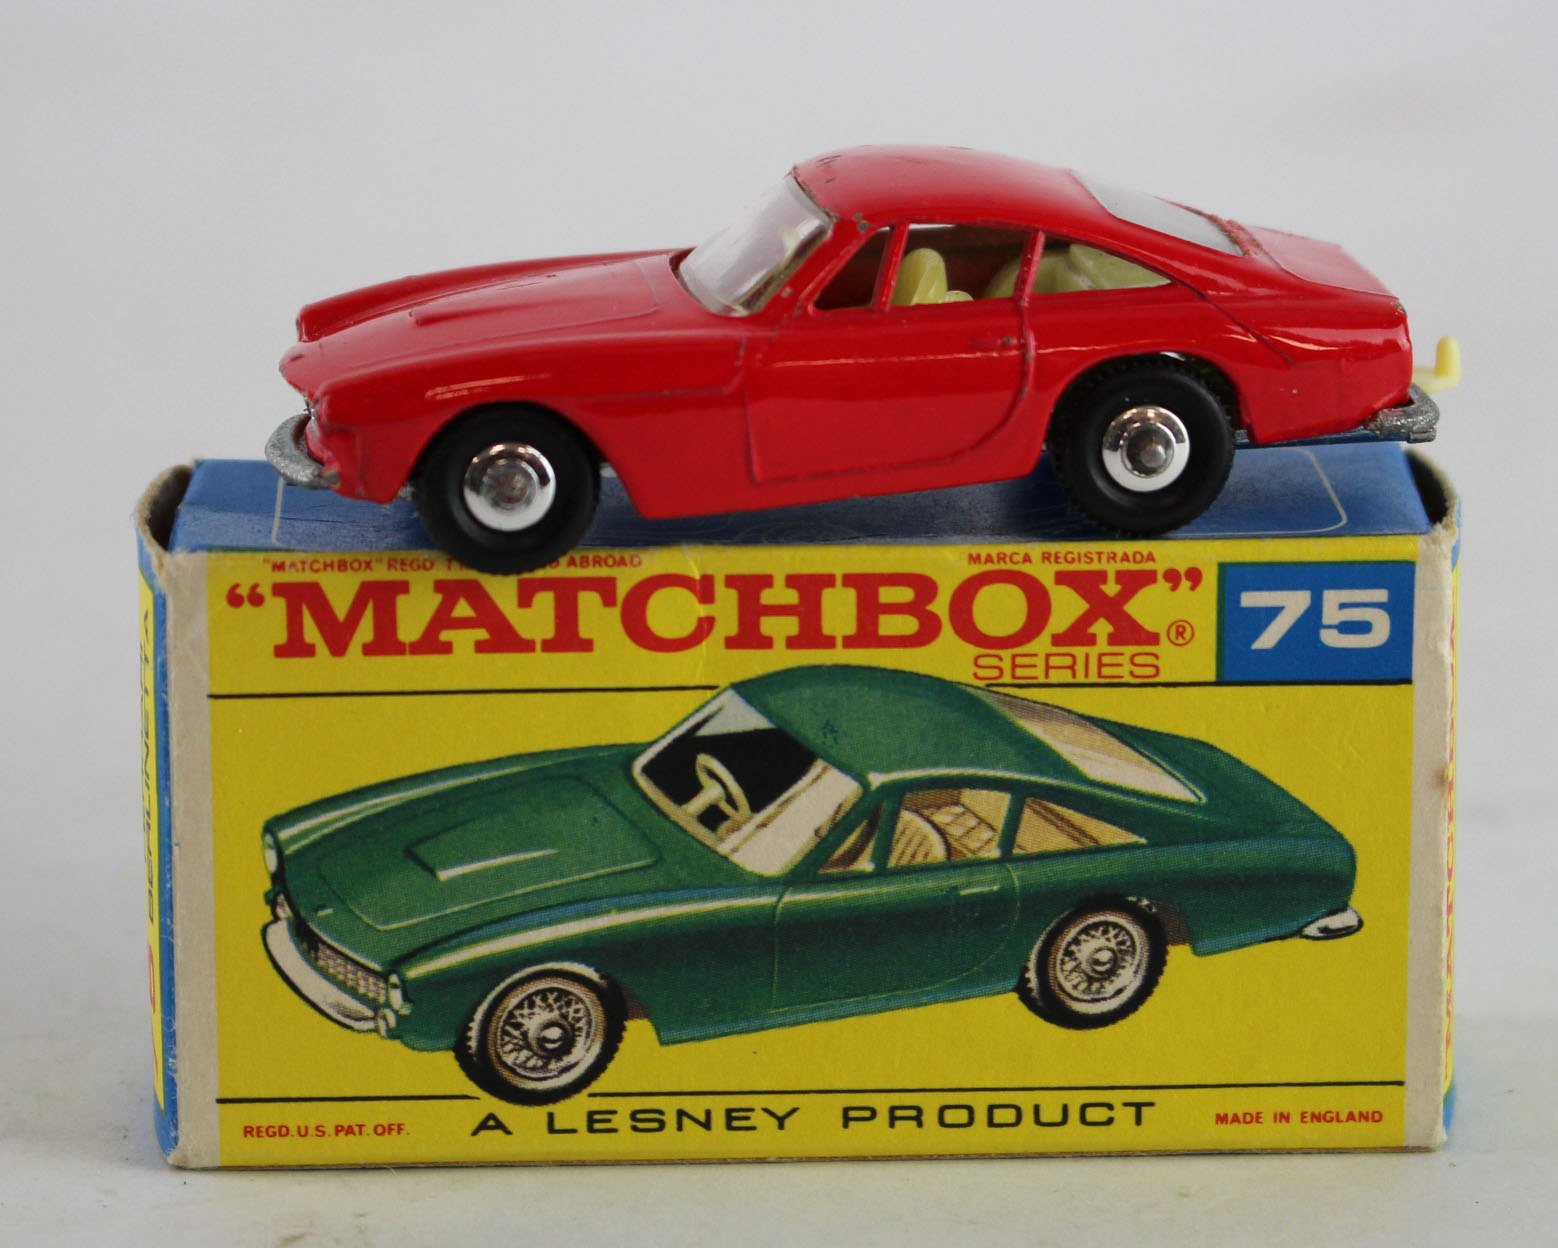 Matchbox Lesney, no. 75 'Ferrari Bernlinetta' (red), contained in original box